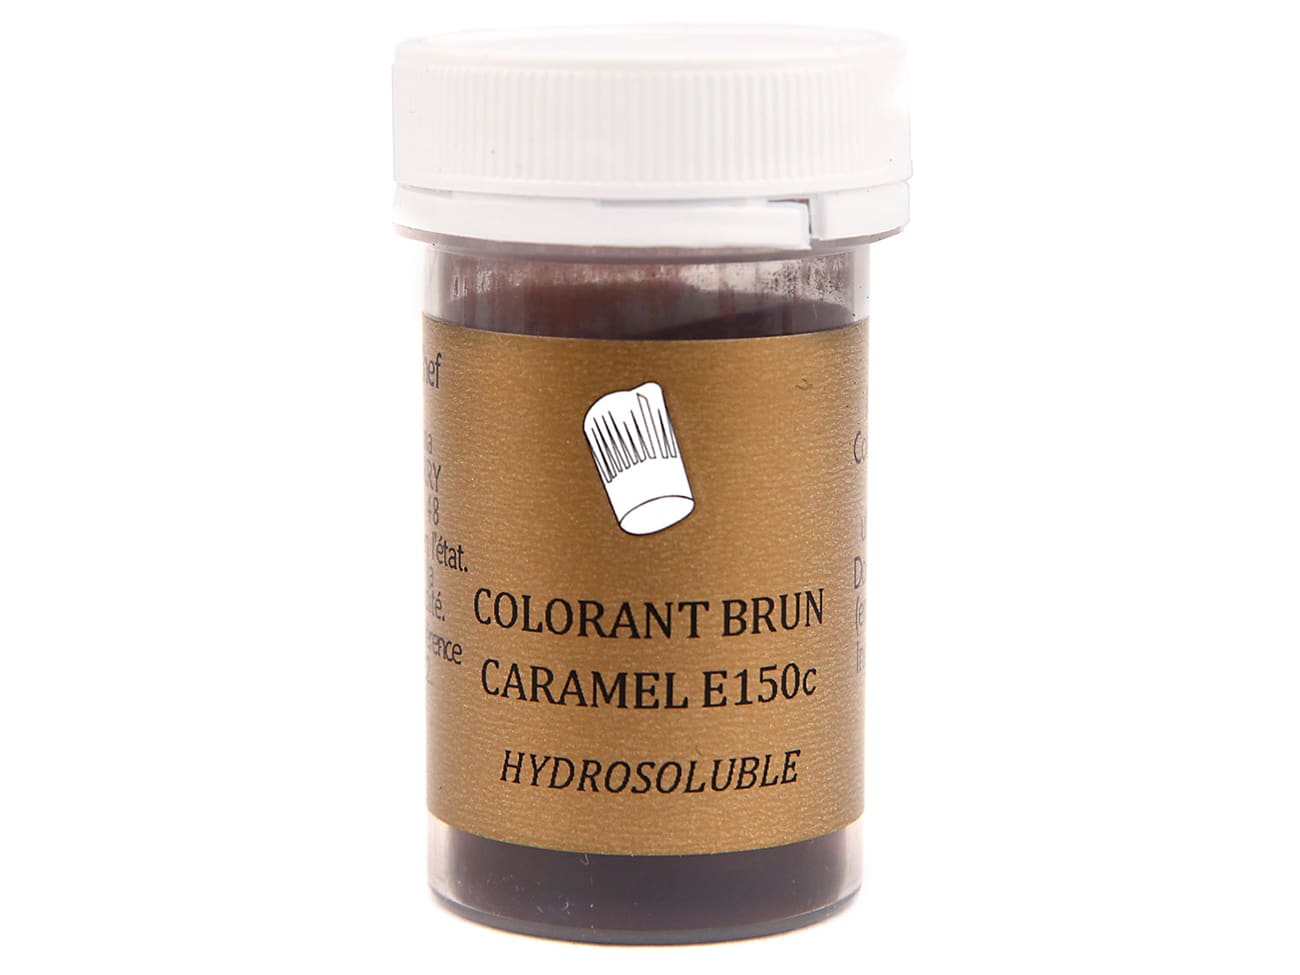 Colorant alimentaire liquide Marron Caramel 115ml - Sélectarôme - MaSpatule